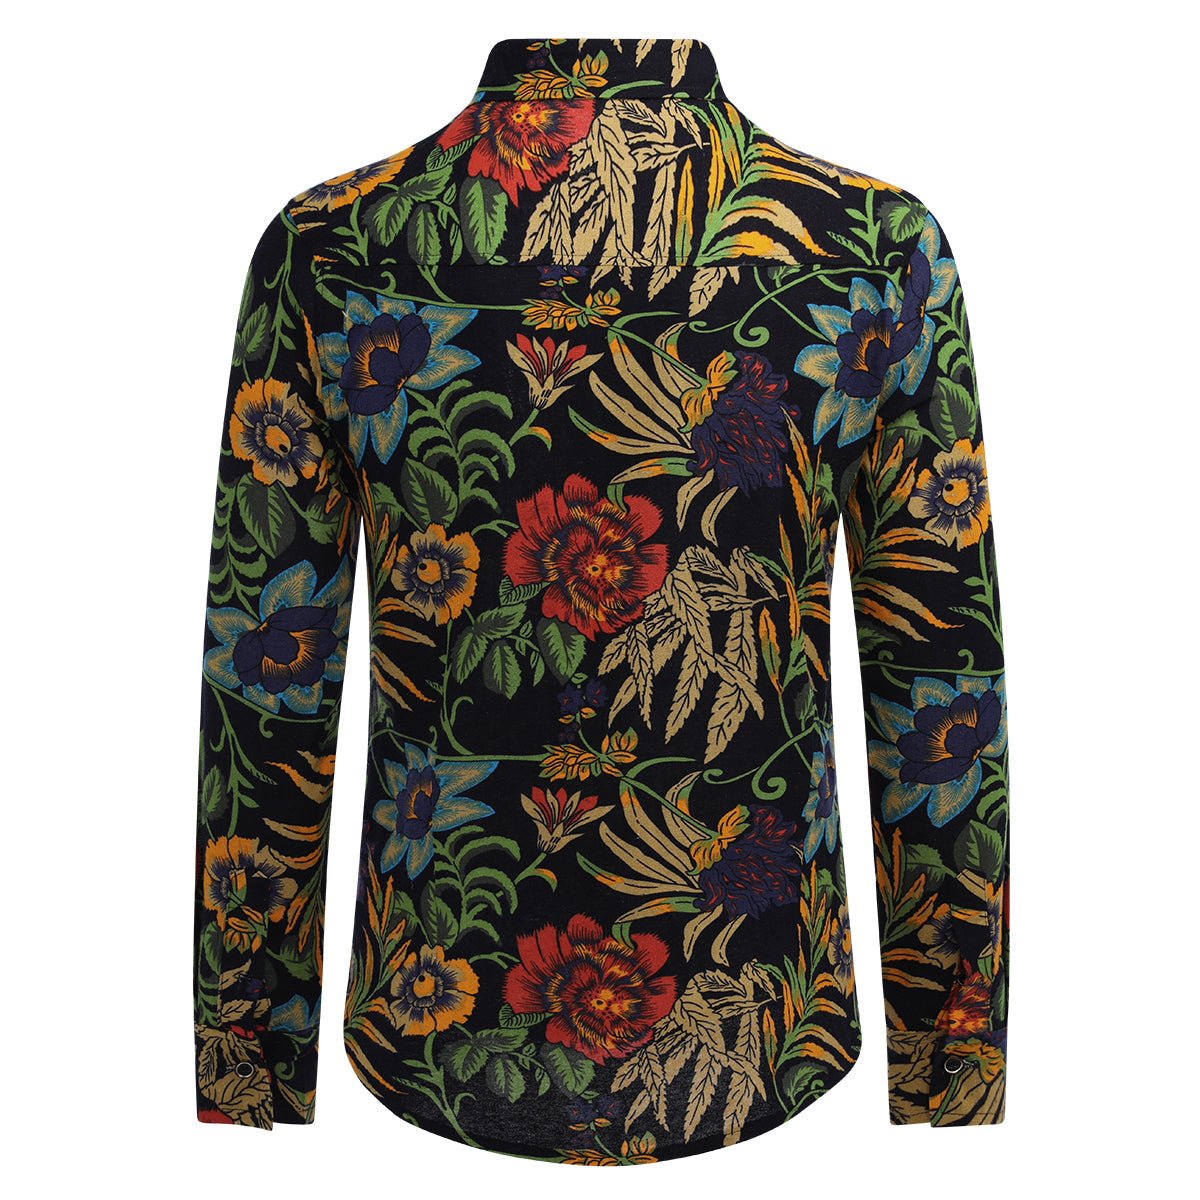 Men's Funky Printed Shirt Casual Shirt Fancy Floral Tops